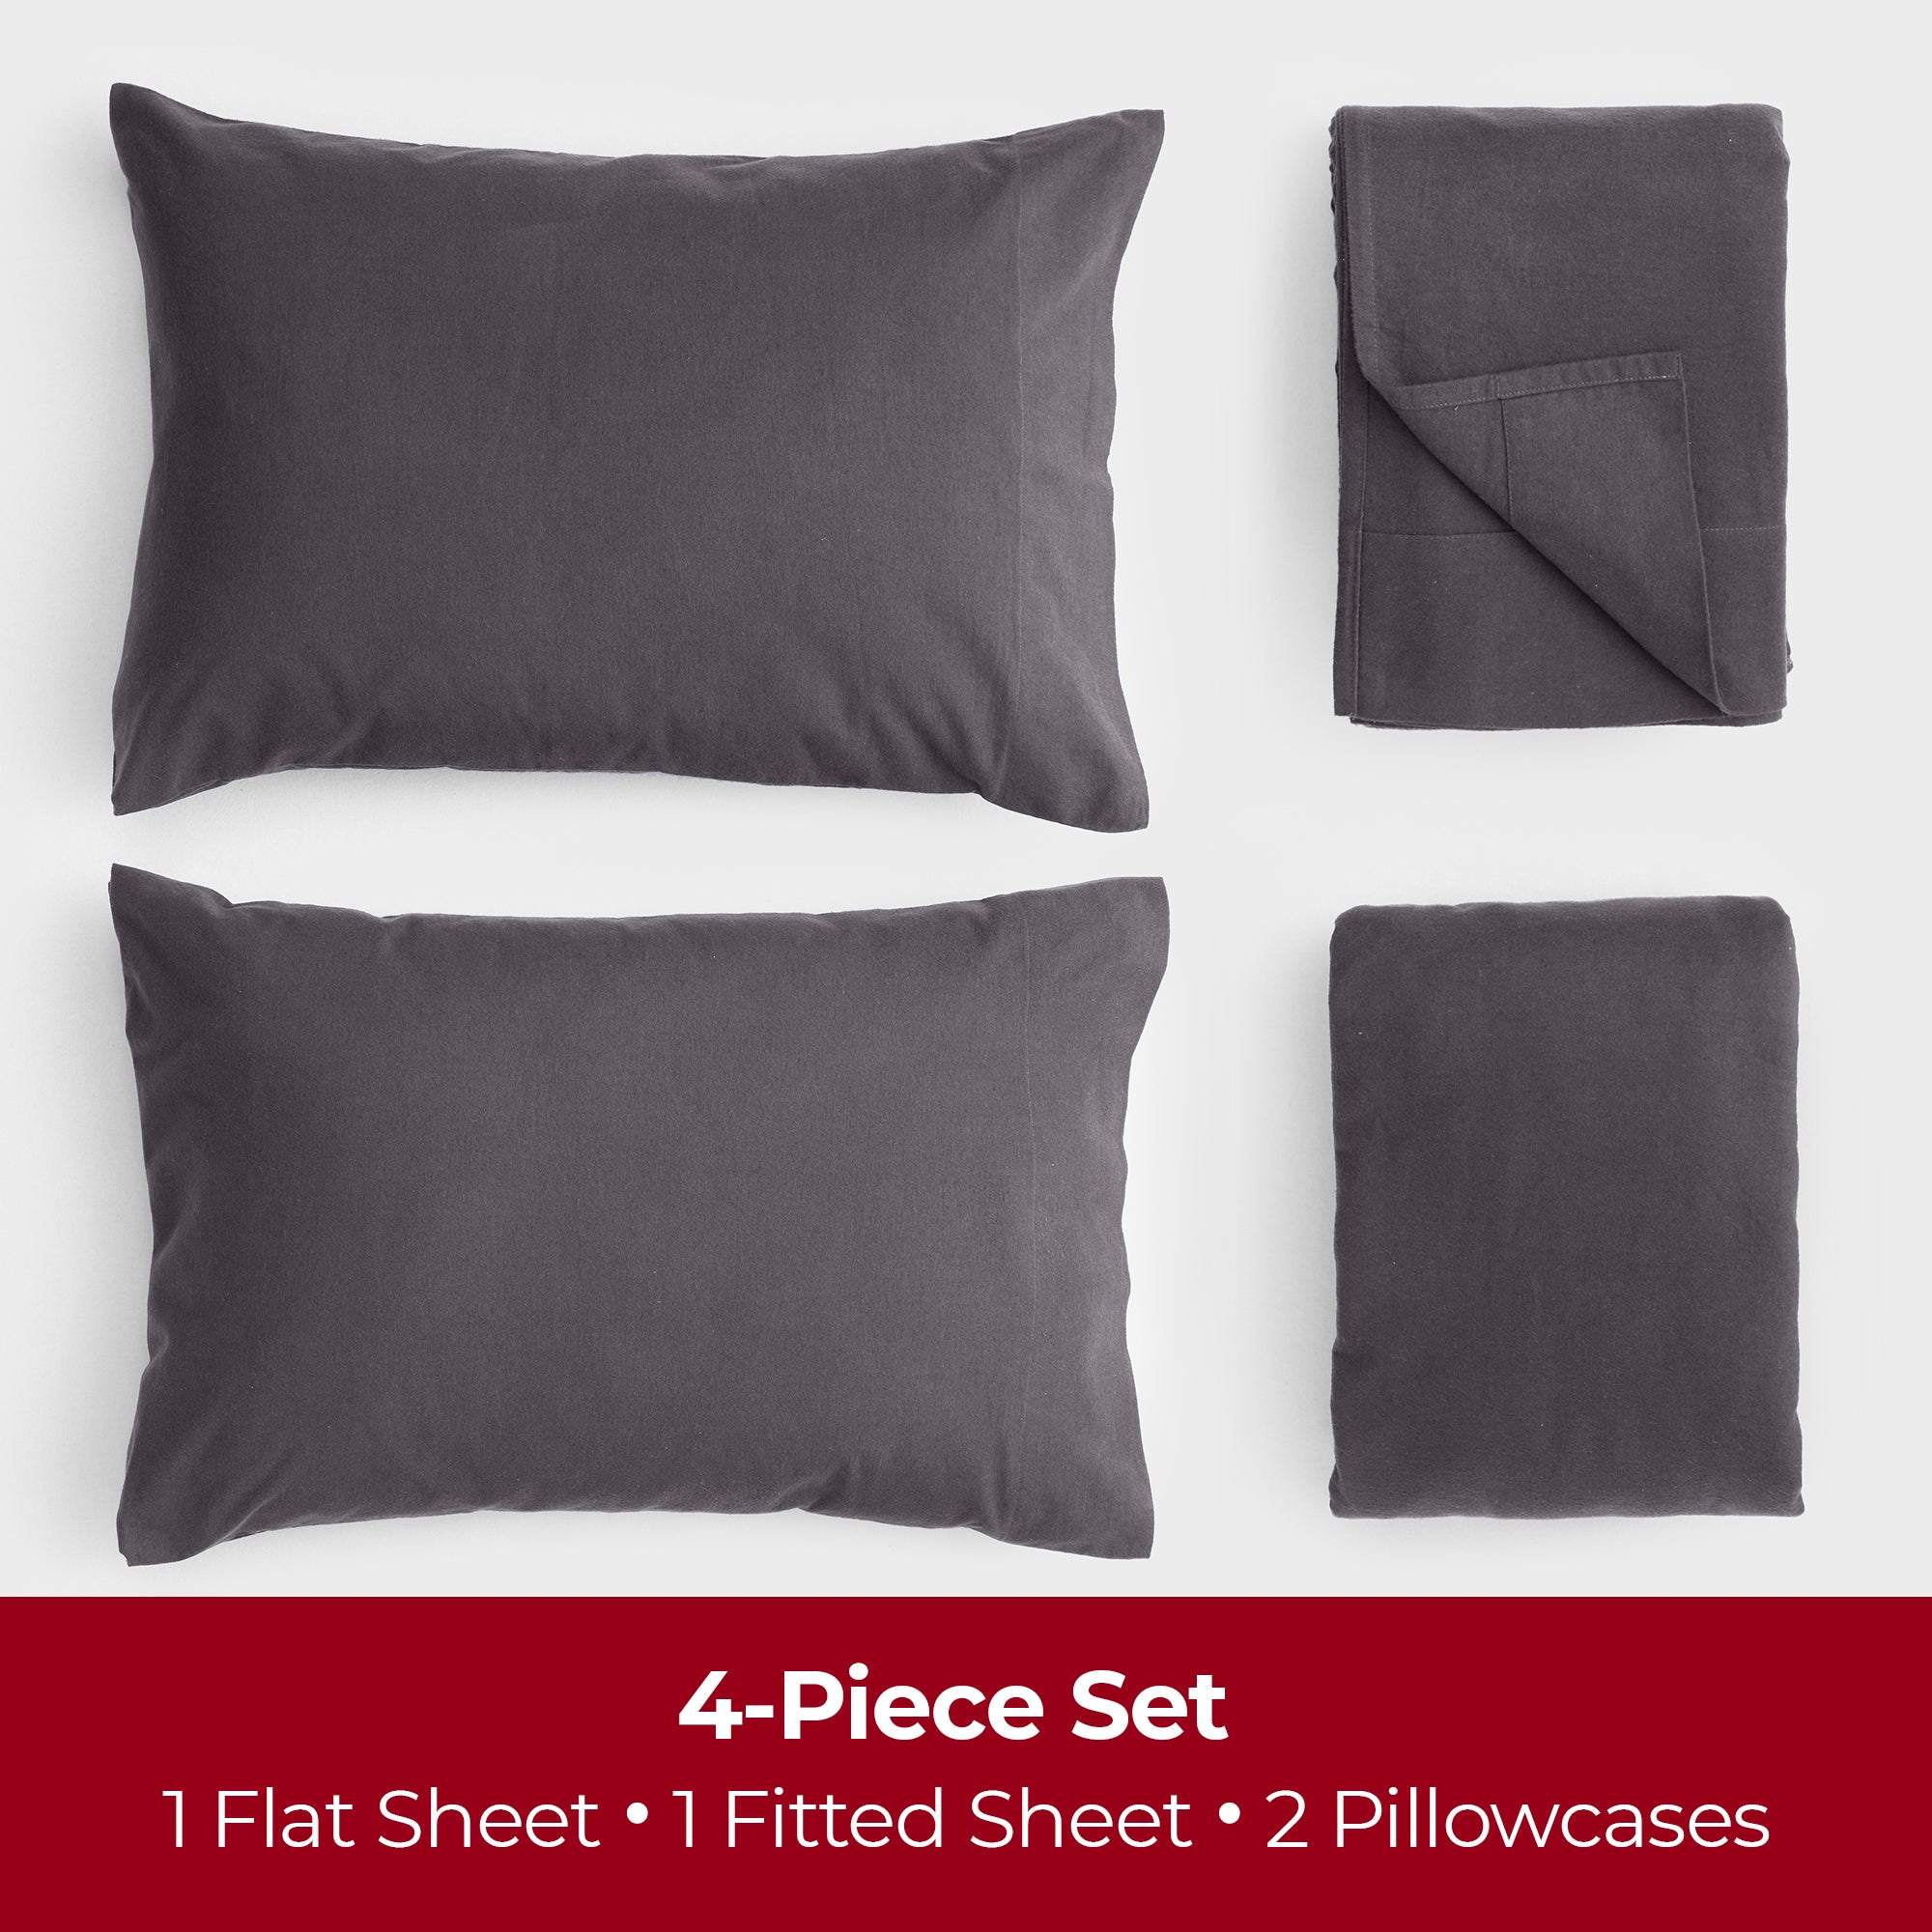 Mellanni Cotton Flannel 4 Piece Sheet Set, Lightweight Deep Pocket Bed Sheets, Queen, Gray - image 3 of 6